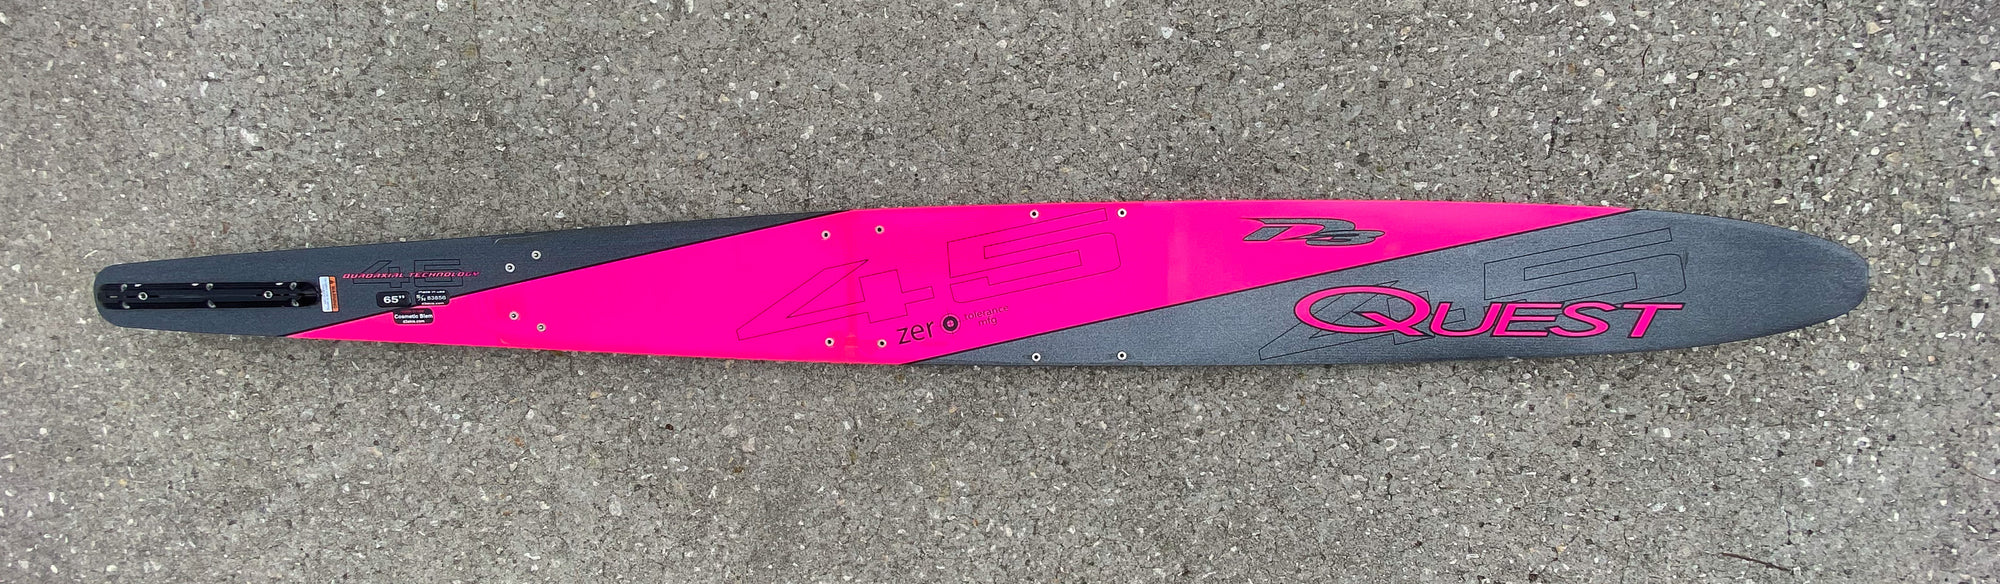 D3 65” Pink Quest Slalom Ski - Used